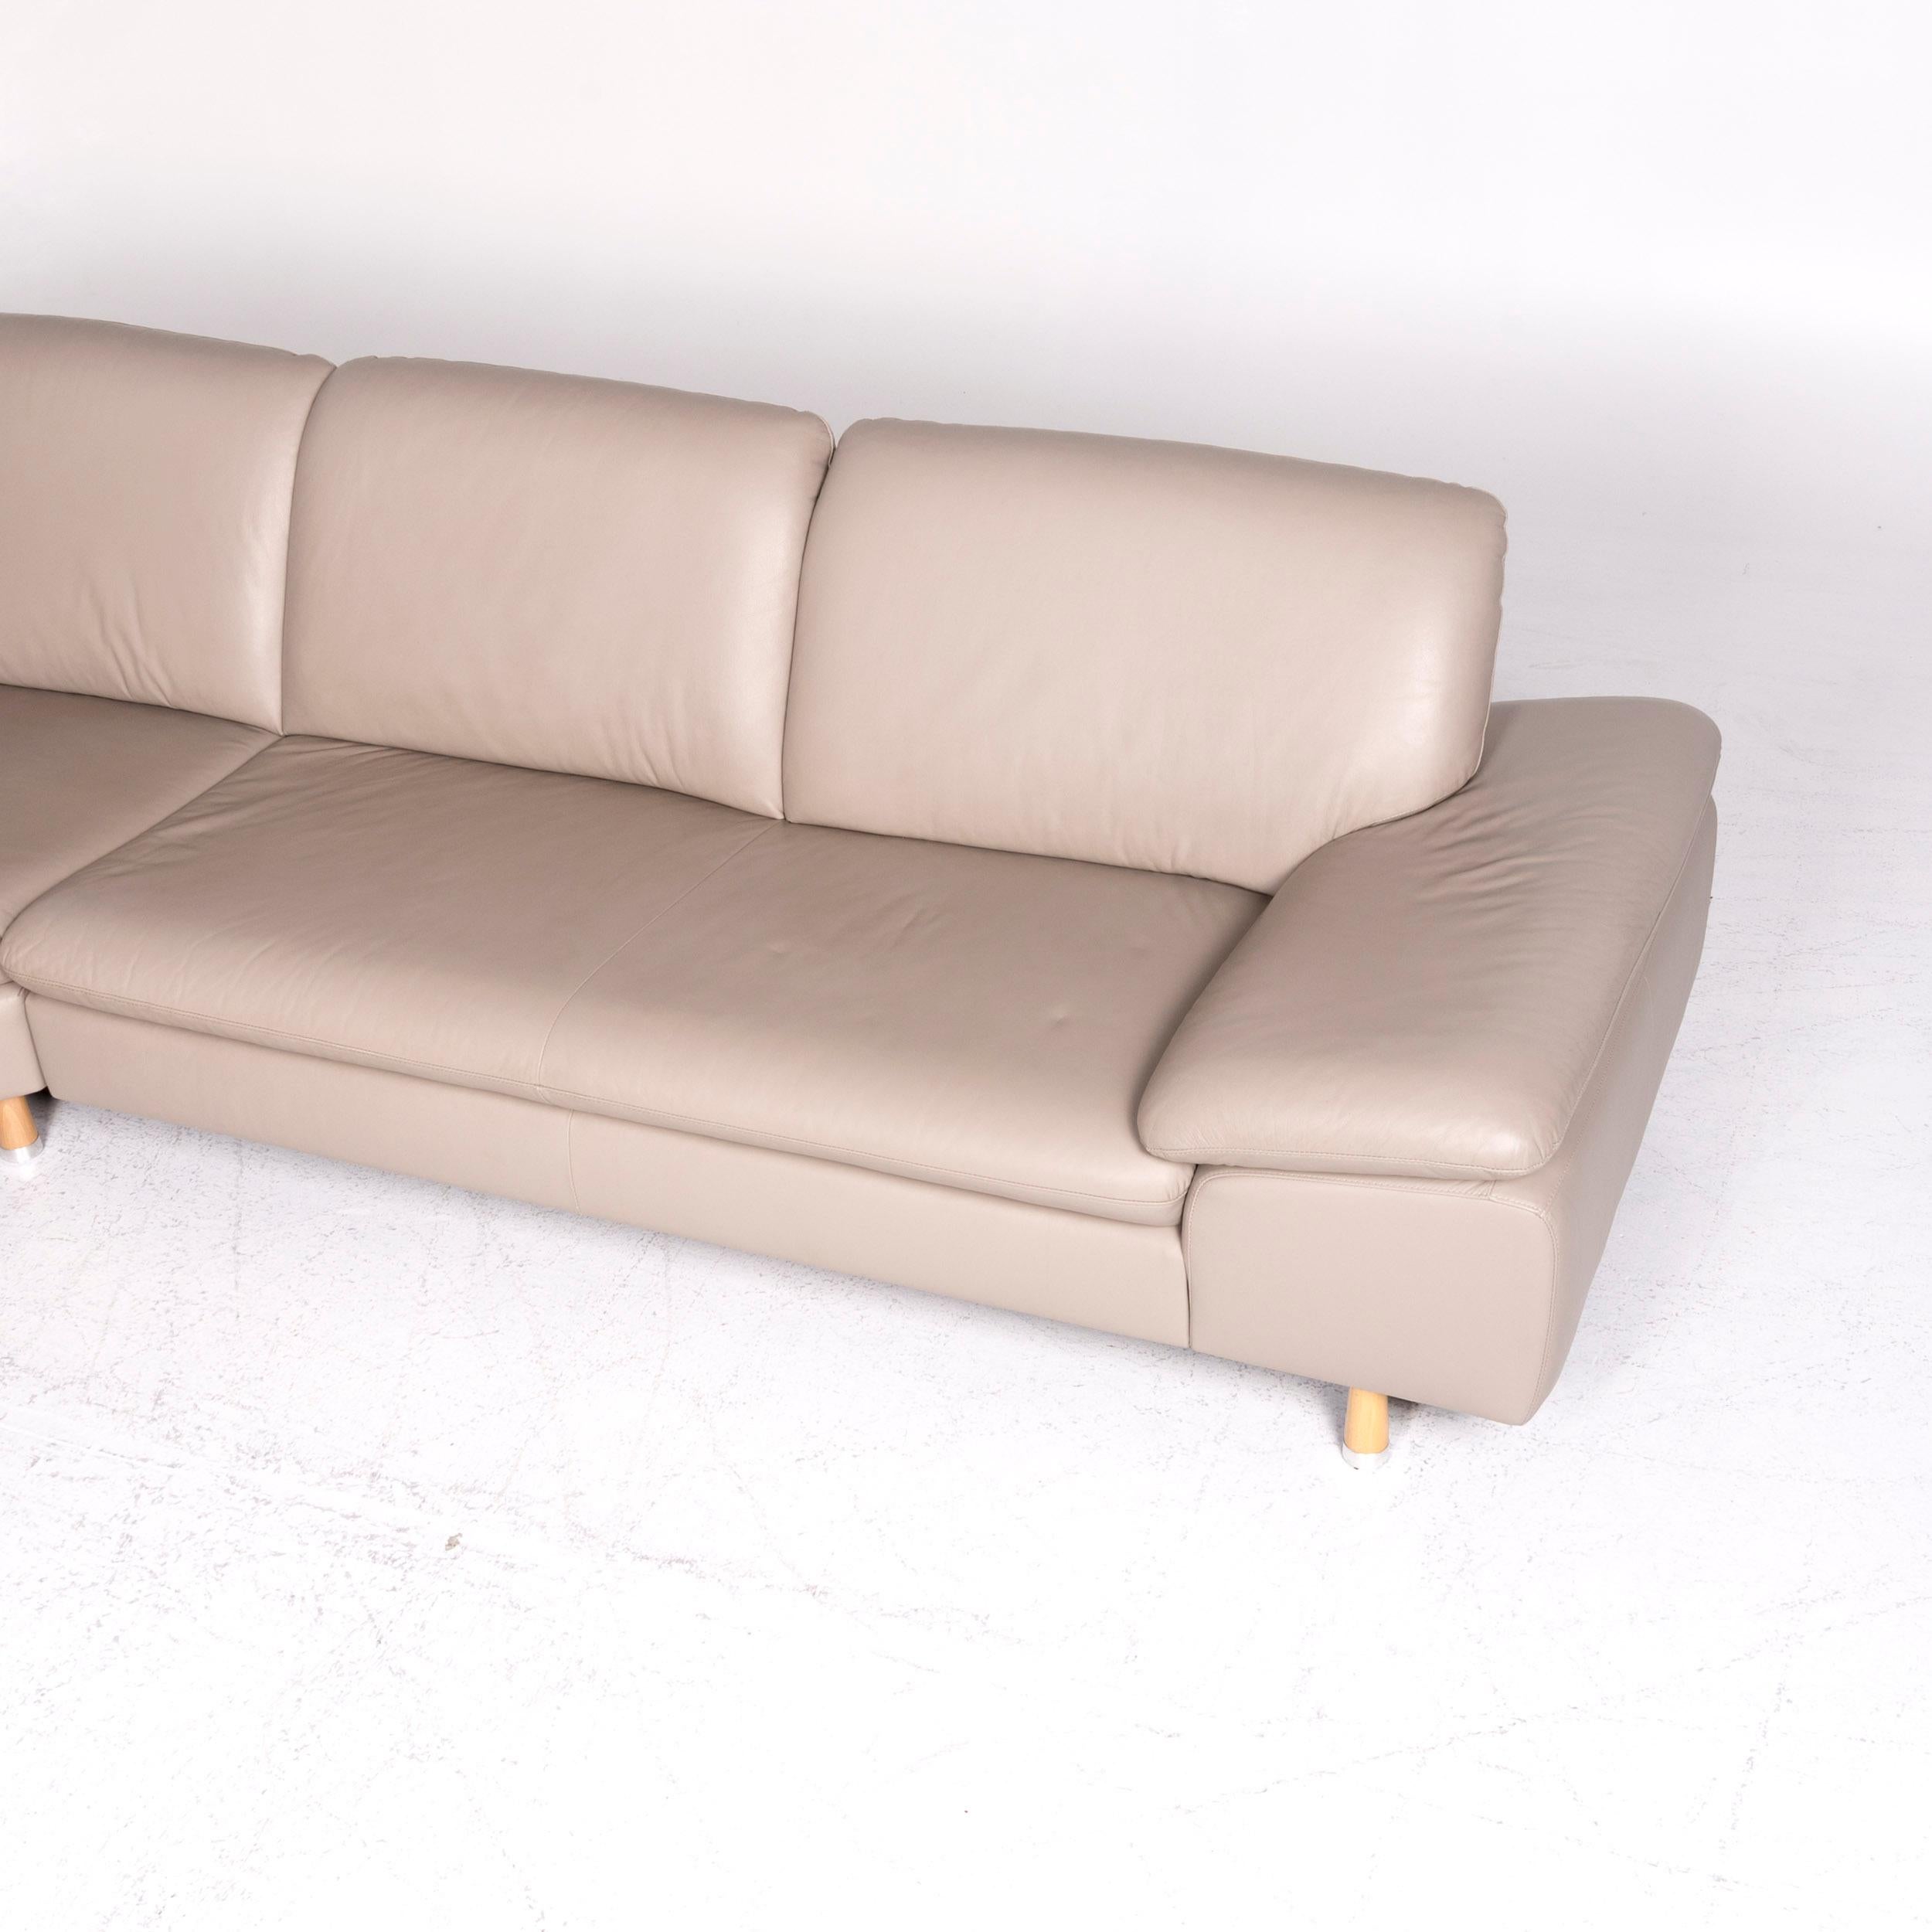 Leather Willi Schillig designer leather sofa Beige corner sofa couch